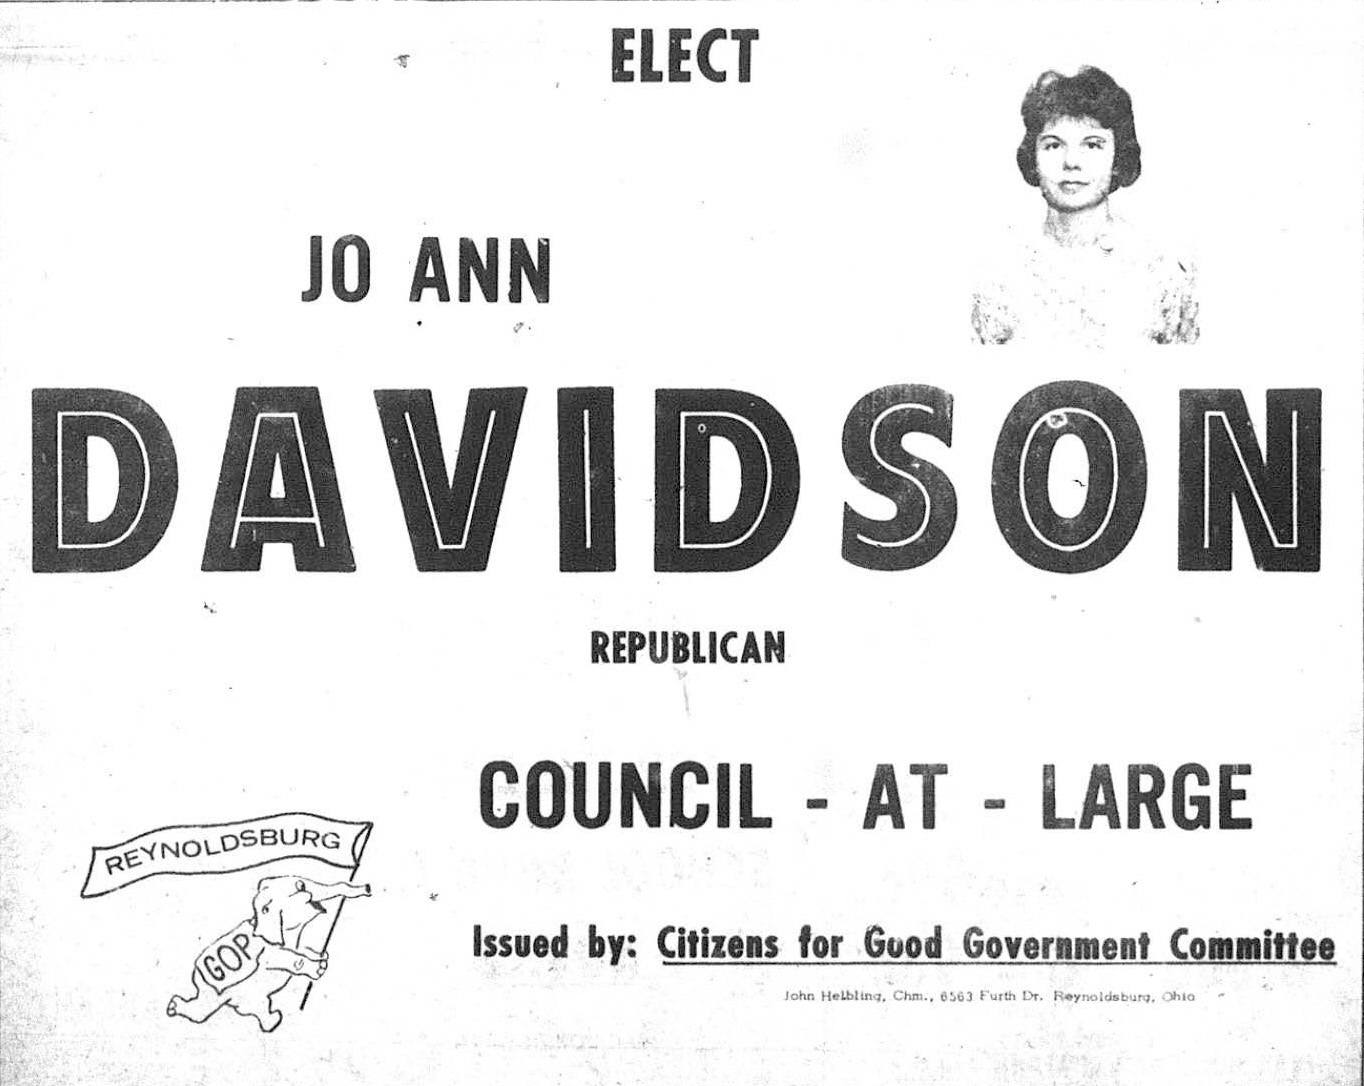 Newspaper ad for Davidson